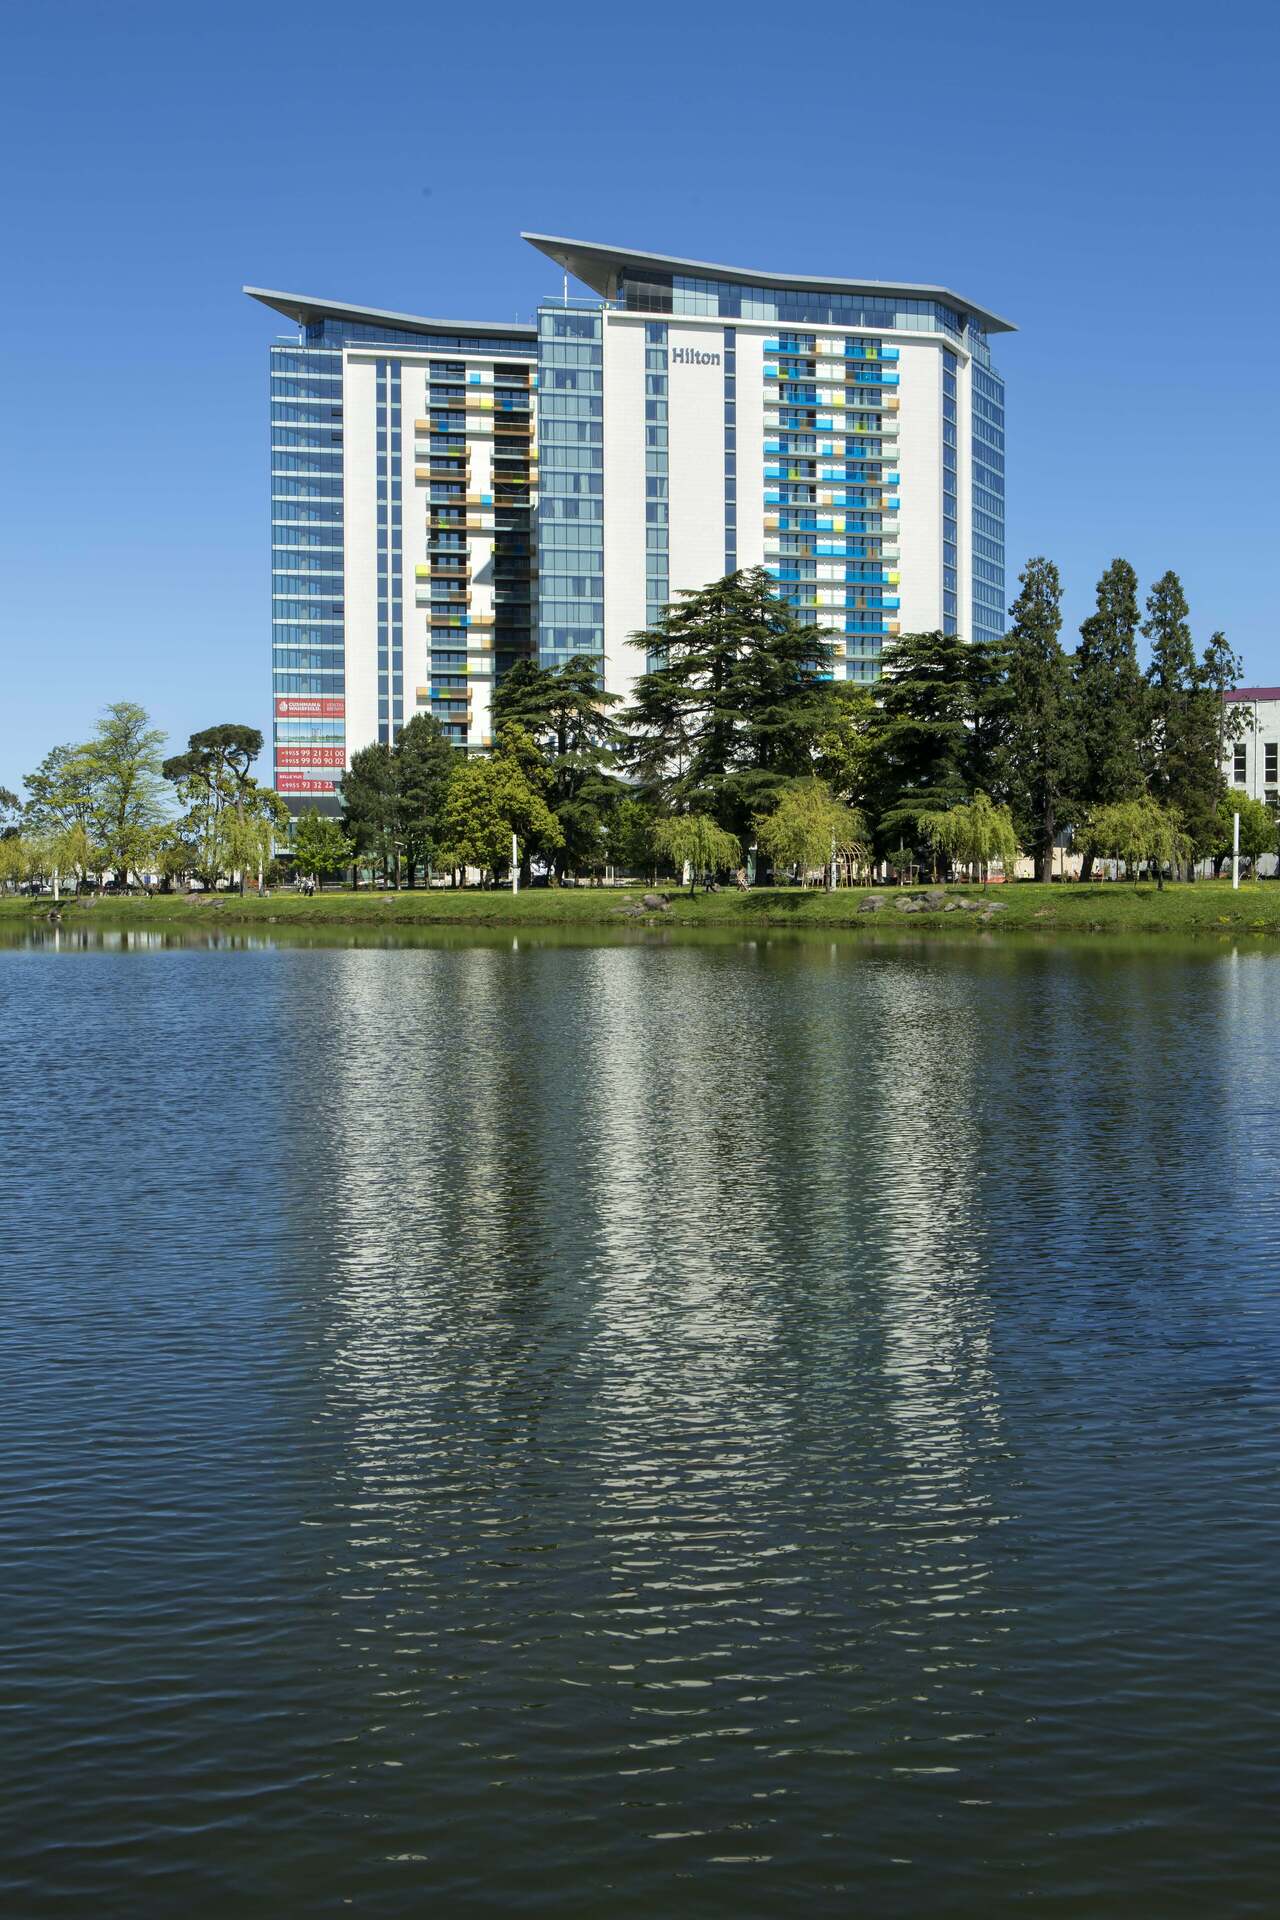 Hilton Serviced Apartments in Batumi